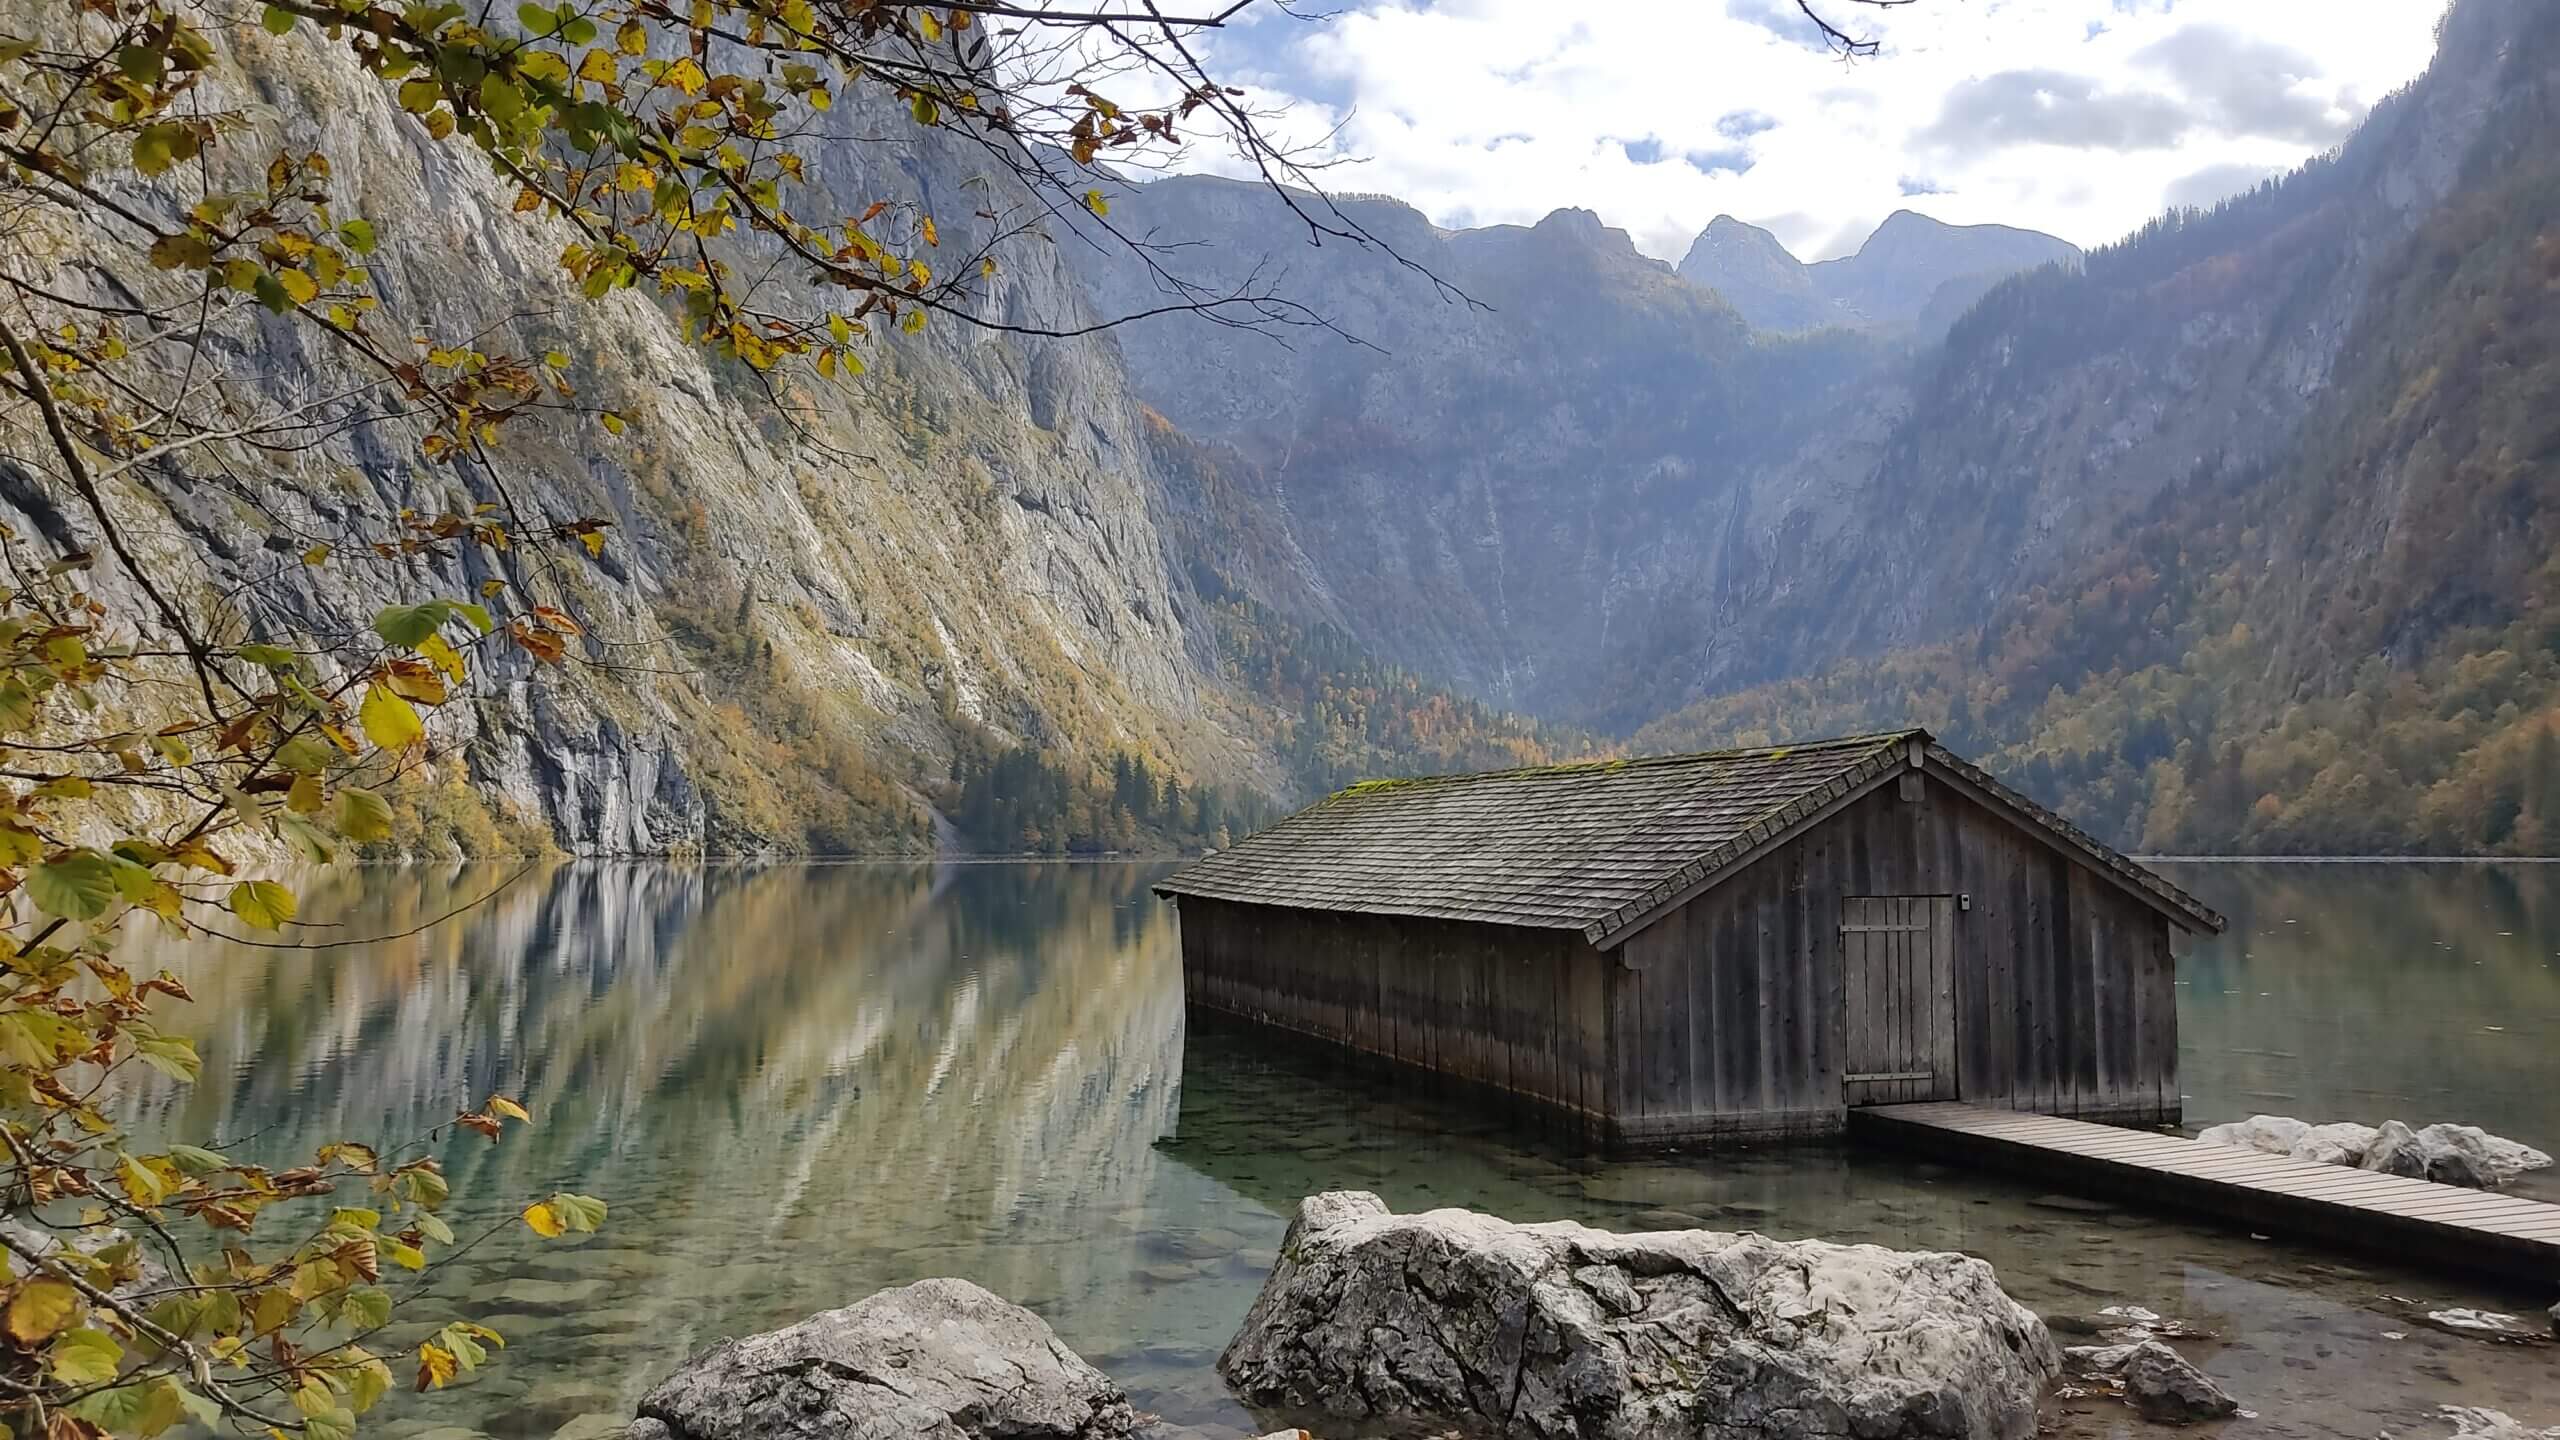 You are currently viewing Urlaub im Berchtesgadener Land Teil 2